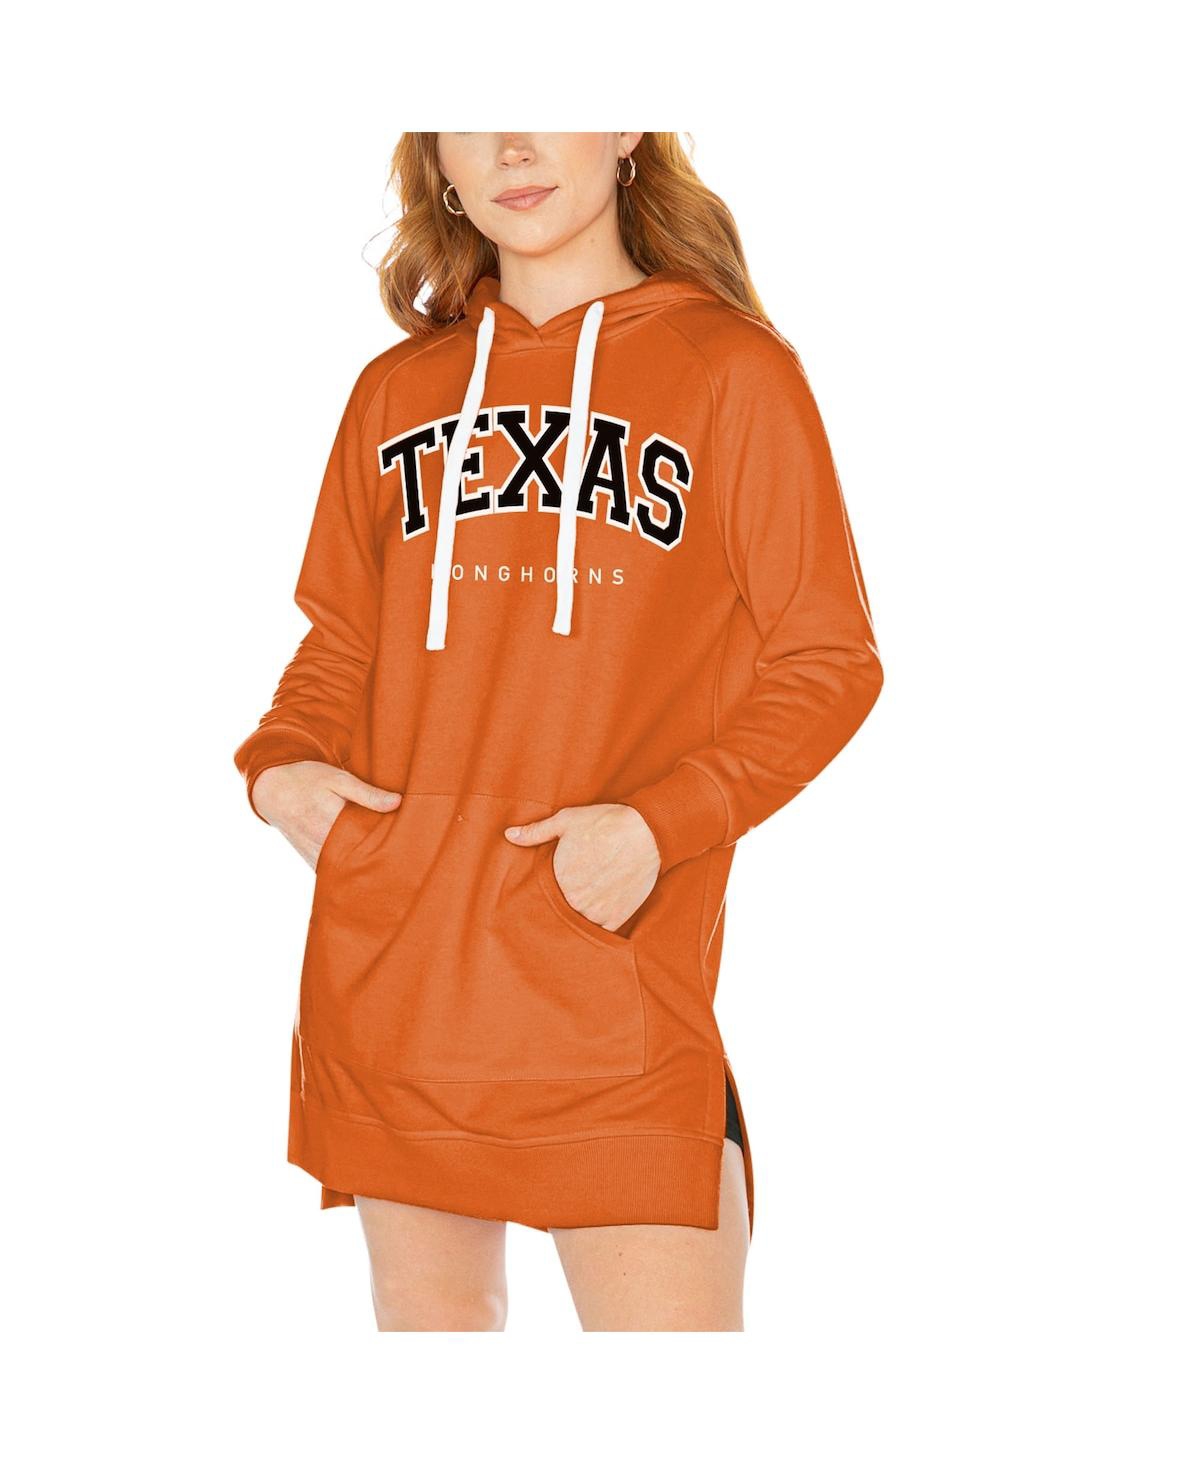 Women's Gameday Couture Texas Orange Texas Longhorns Take a Knee Raglan Hooded Sweatshirt Dress - Texas Orange